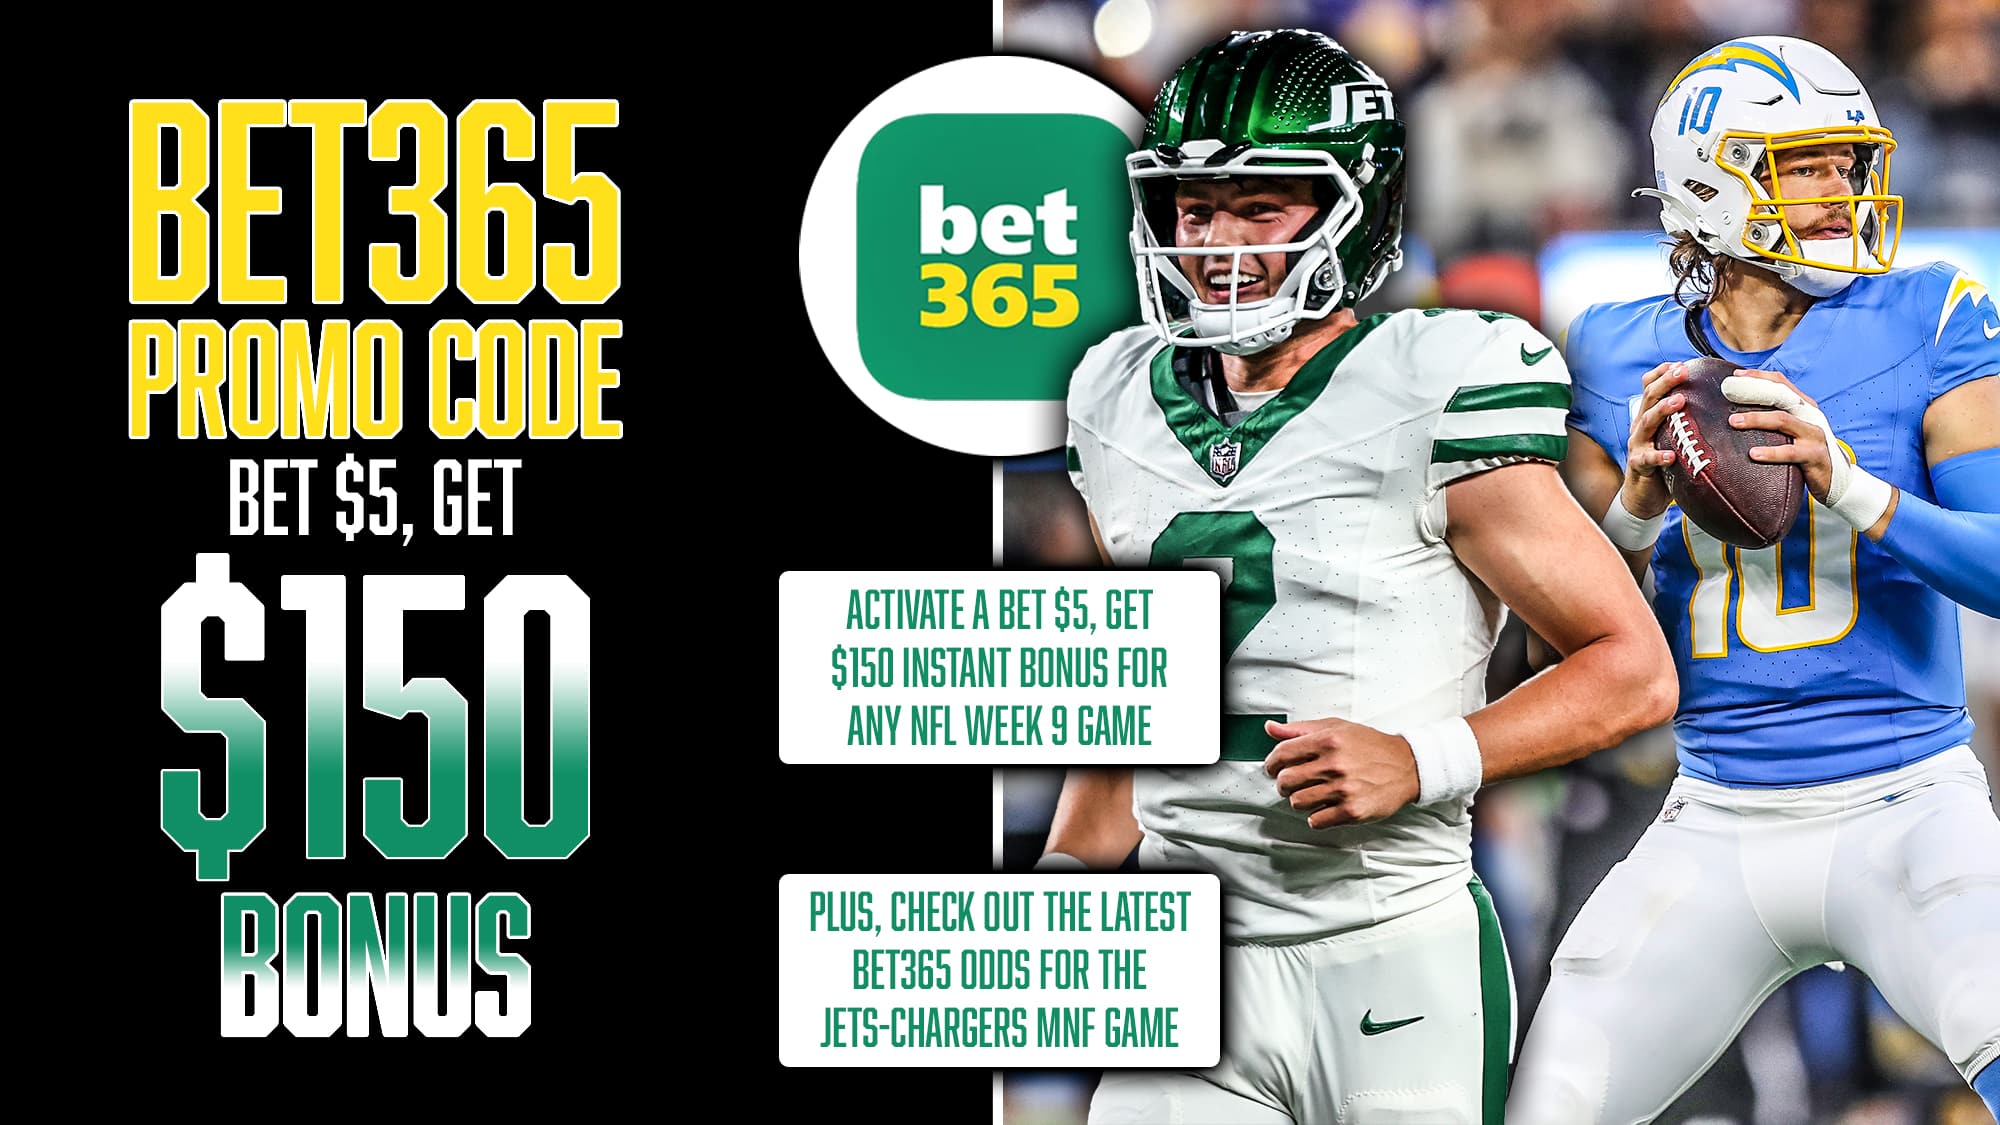 bet365 Promo Code NFL, Get $150 Instant Bonus, Jets-Chargers Odds, Week 9